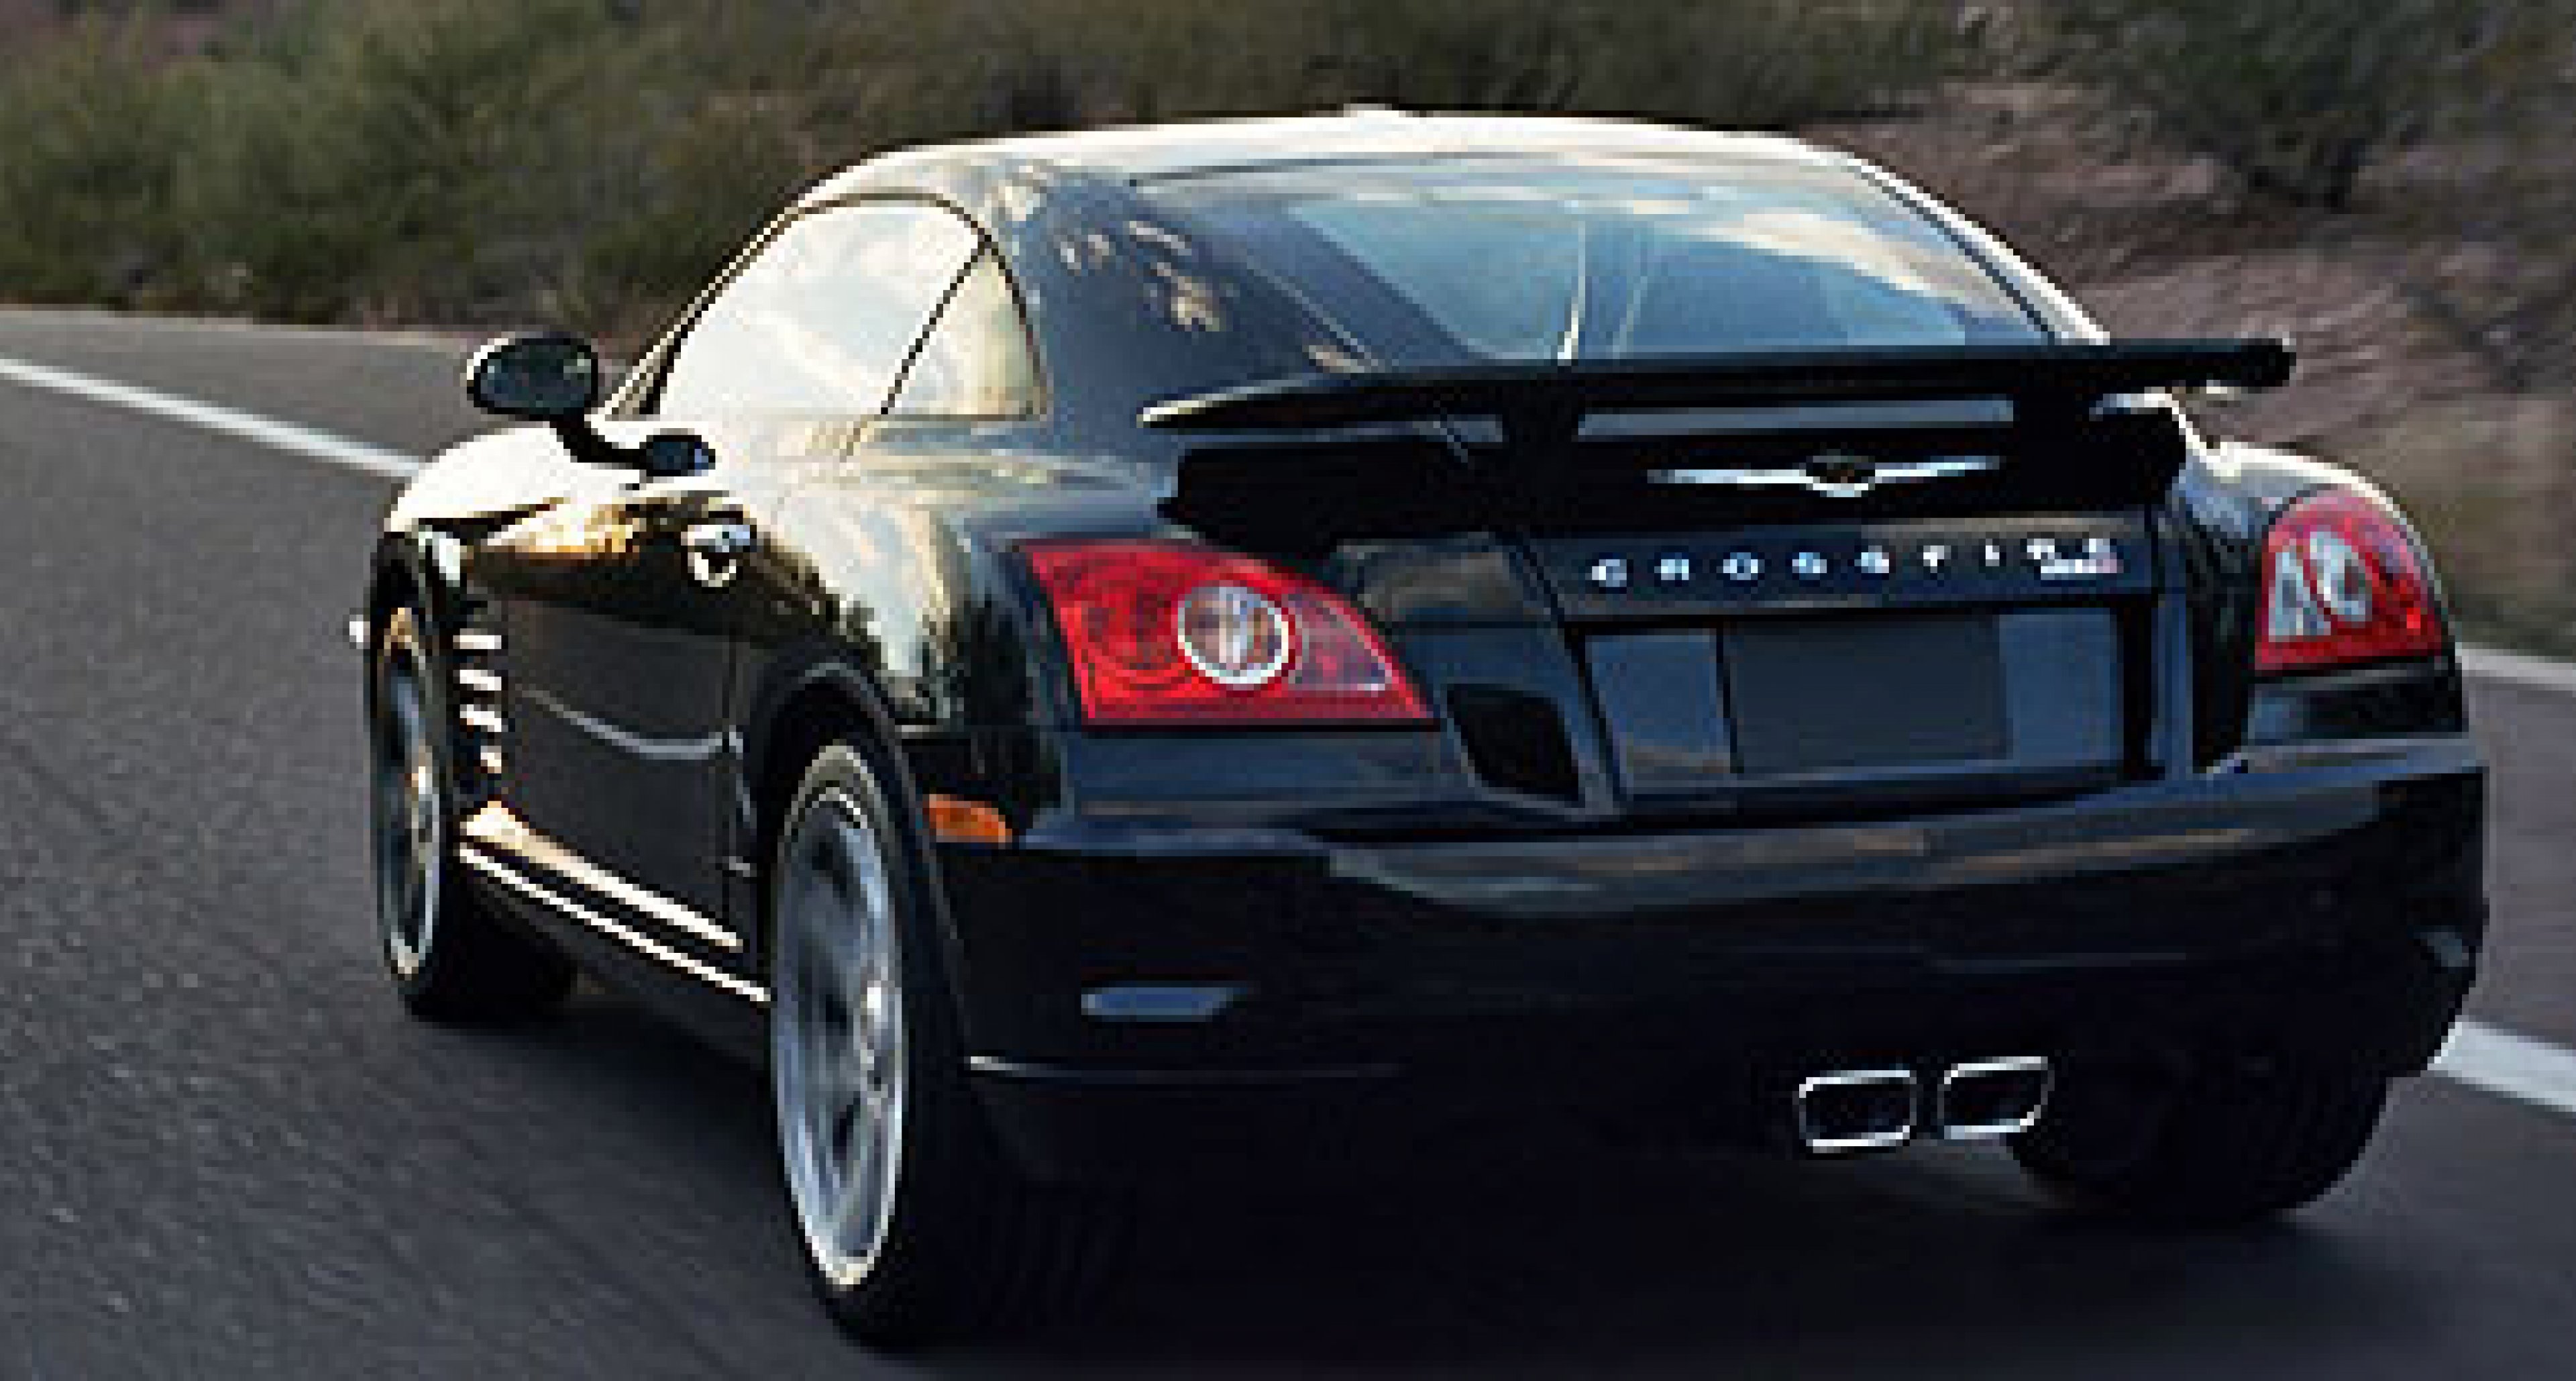 Chrysler crossfire srt6 emblems #3